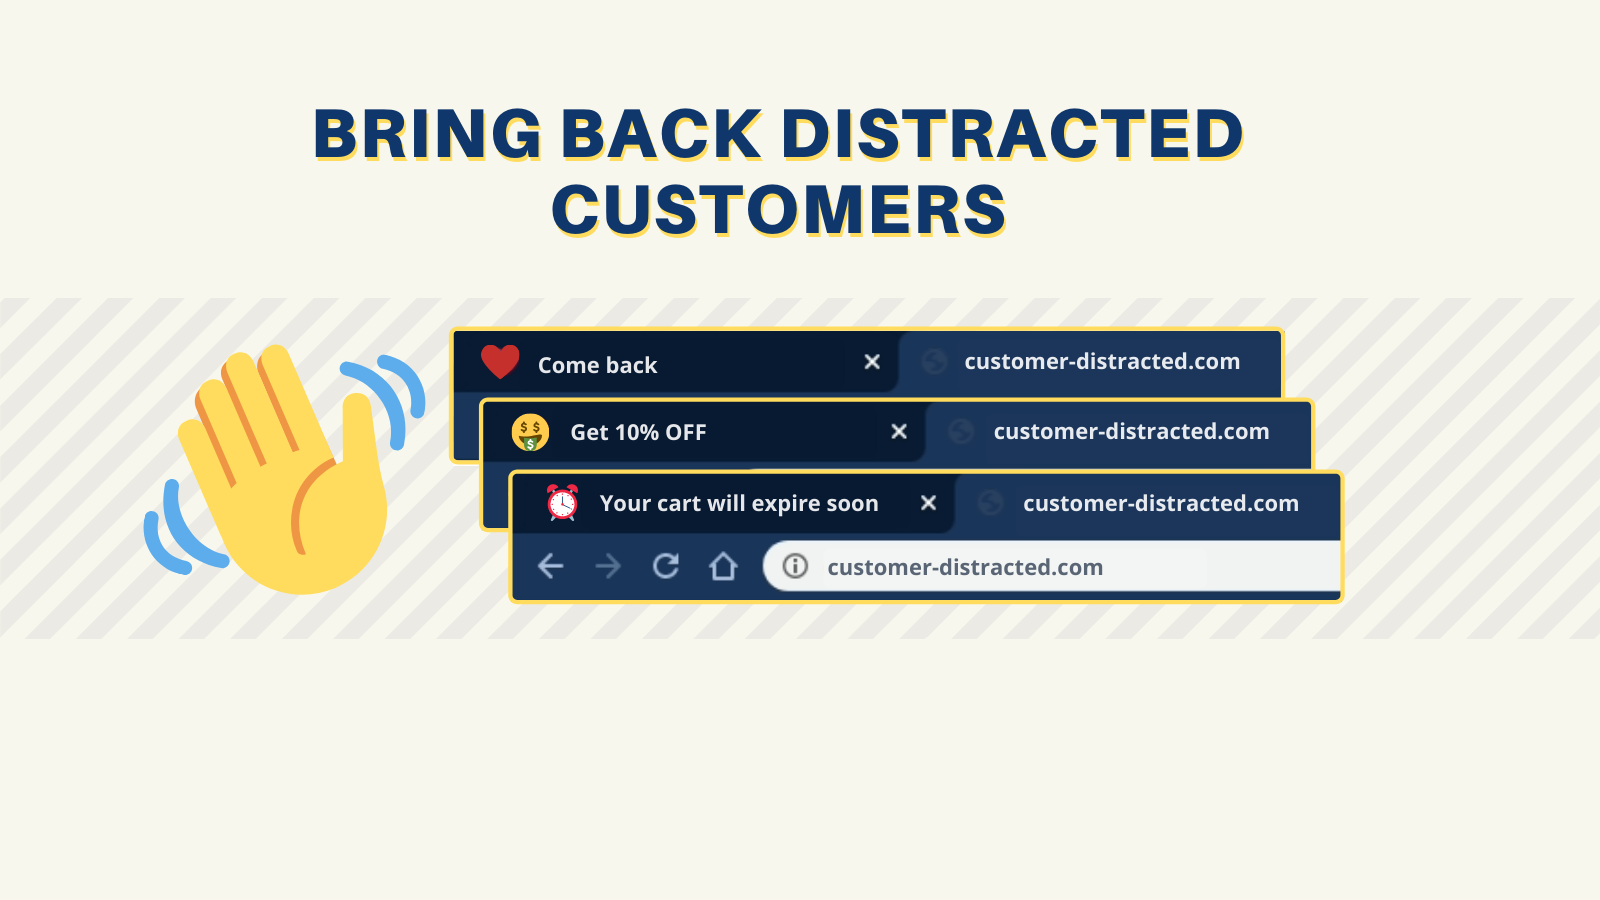 Bring back distracted customers, reduce cart abandonment